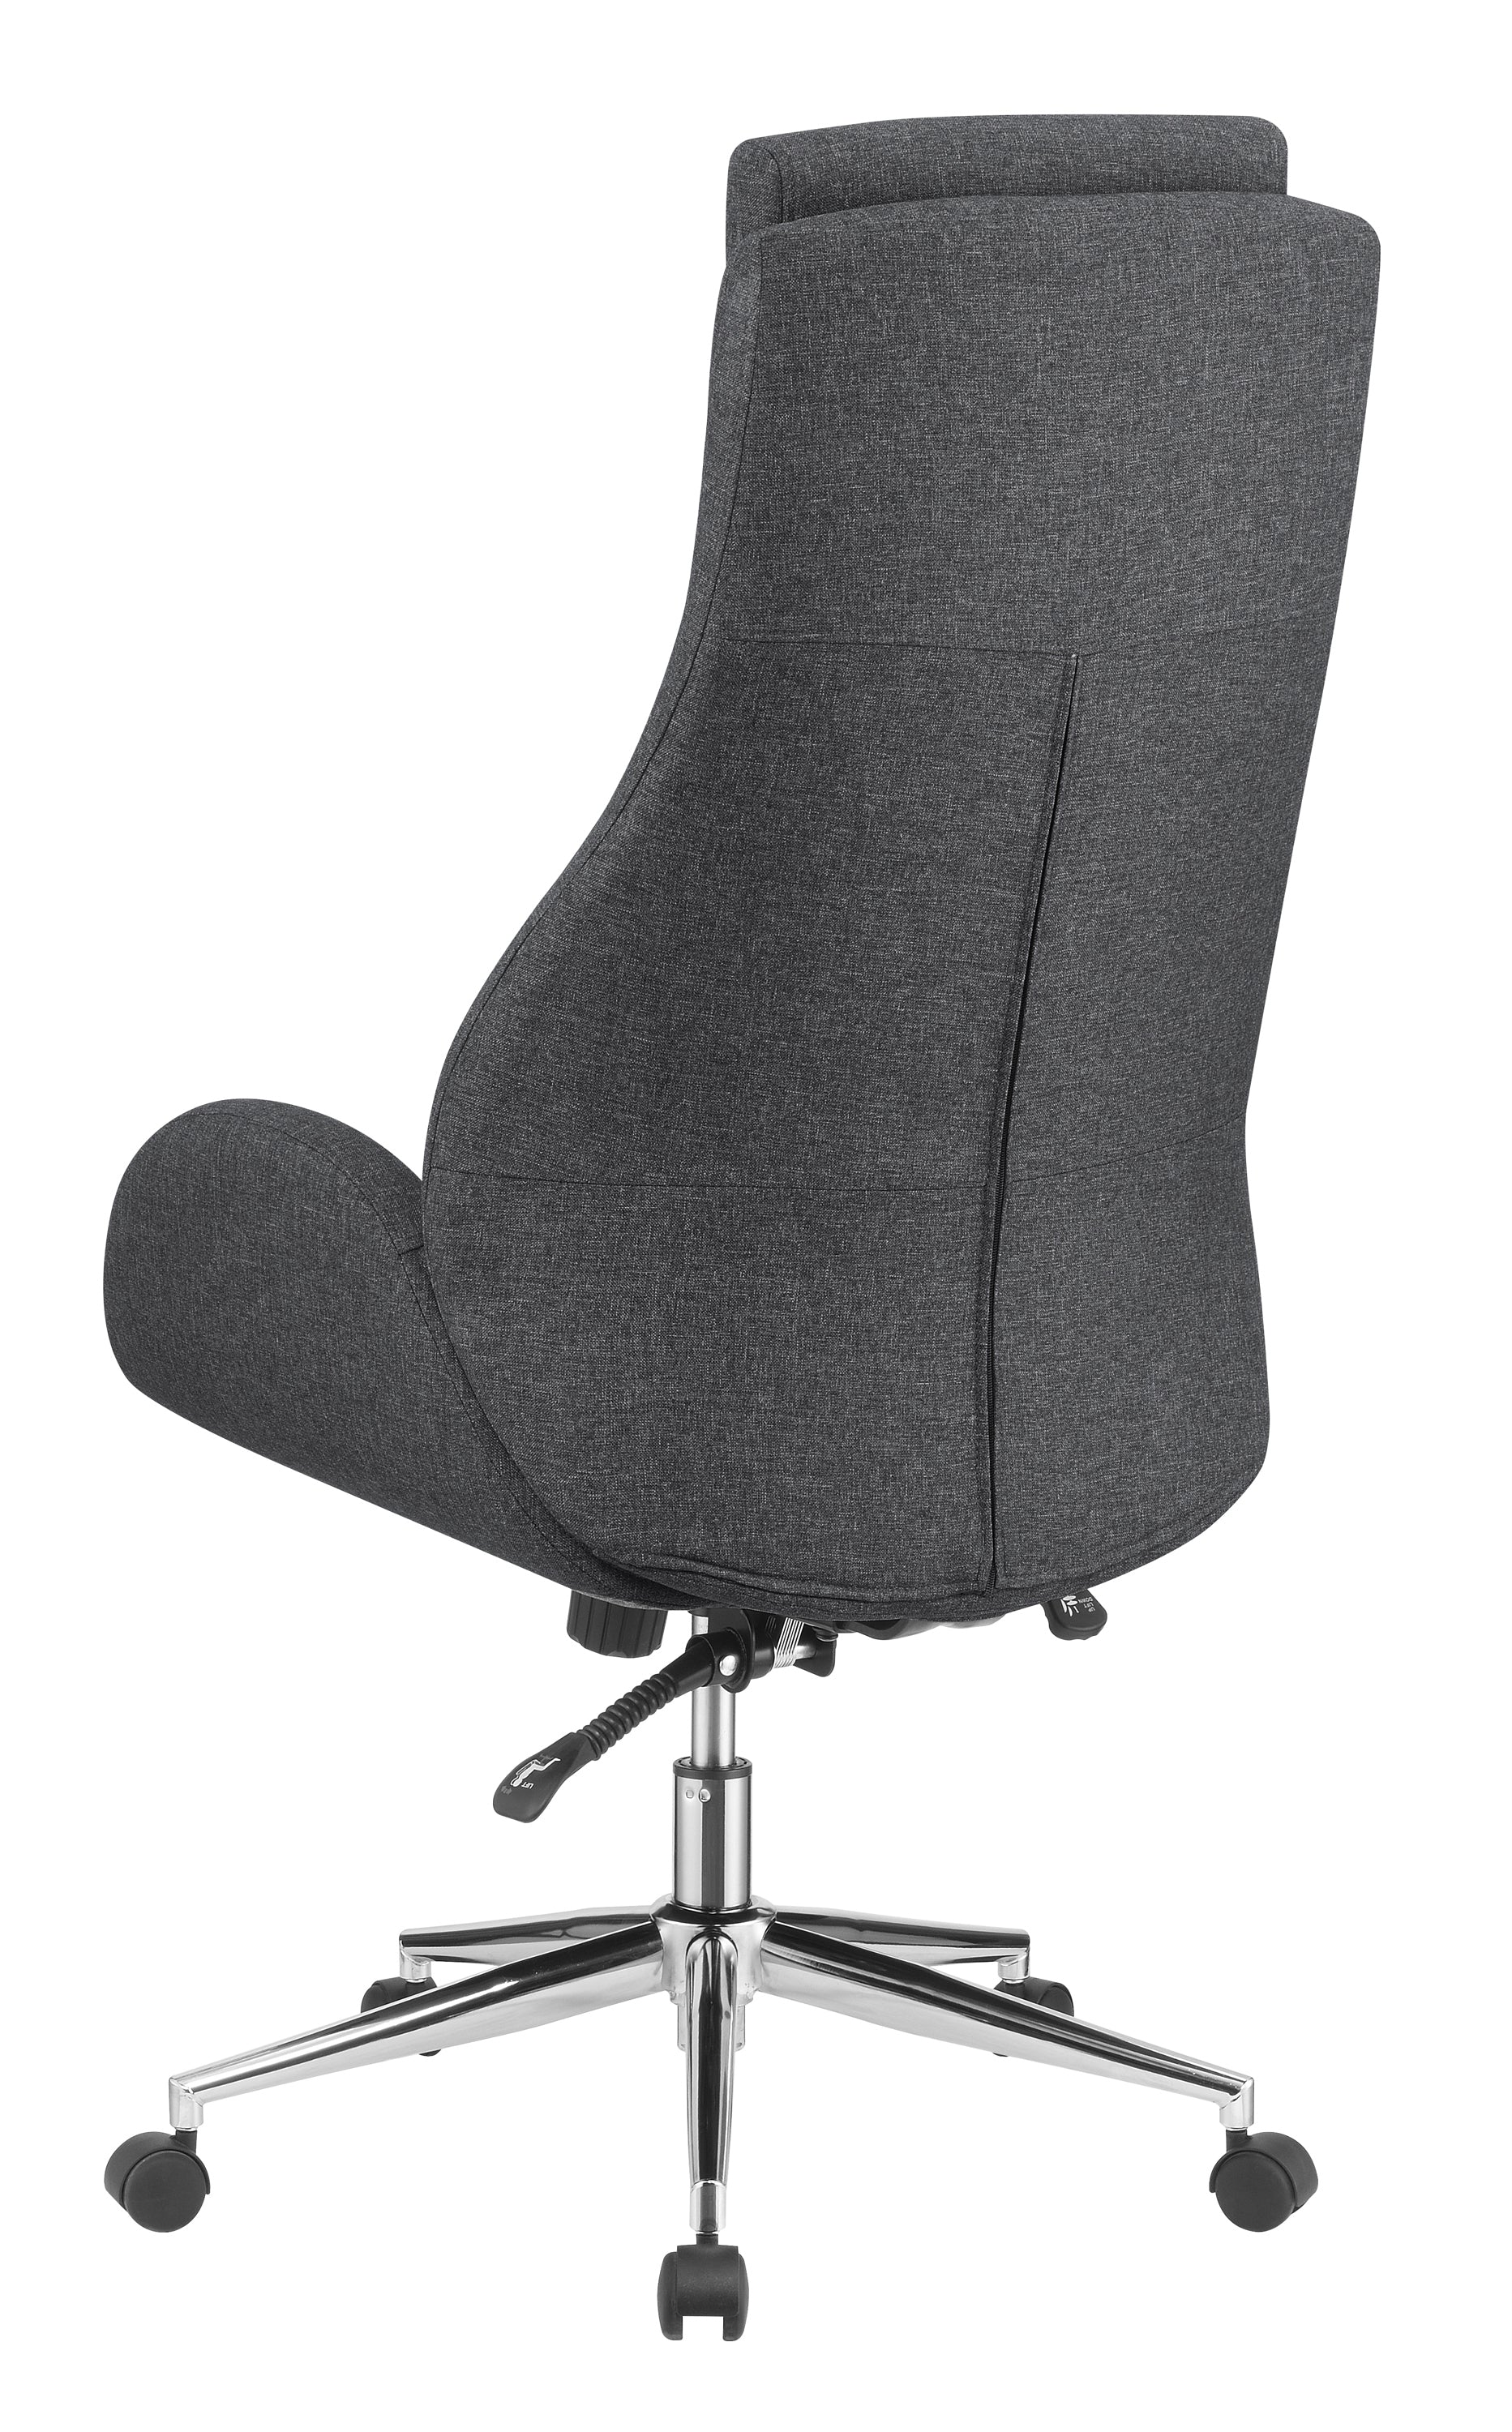 Chrome & Fabric Office Chair